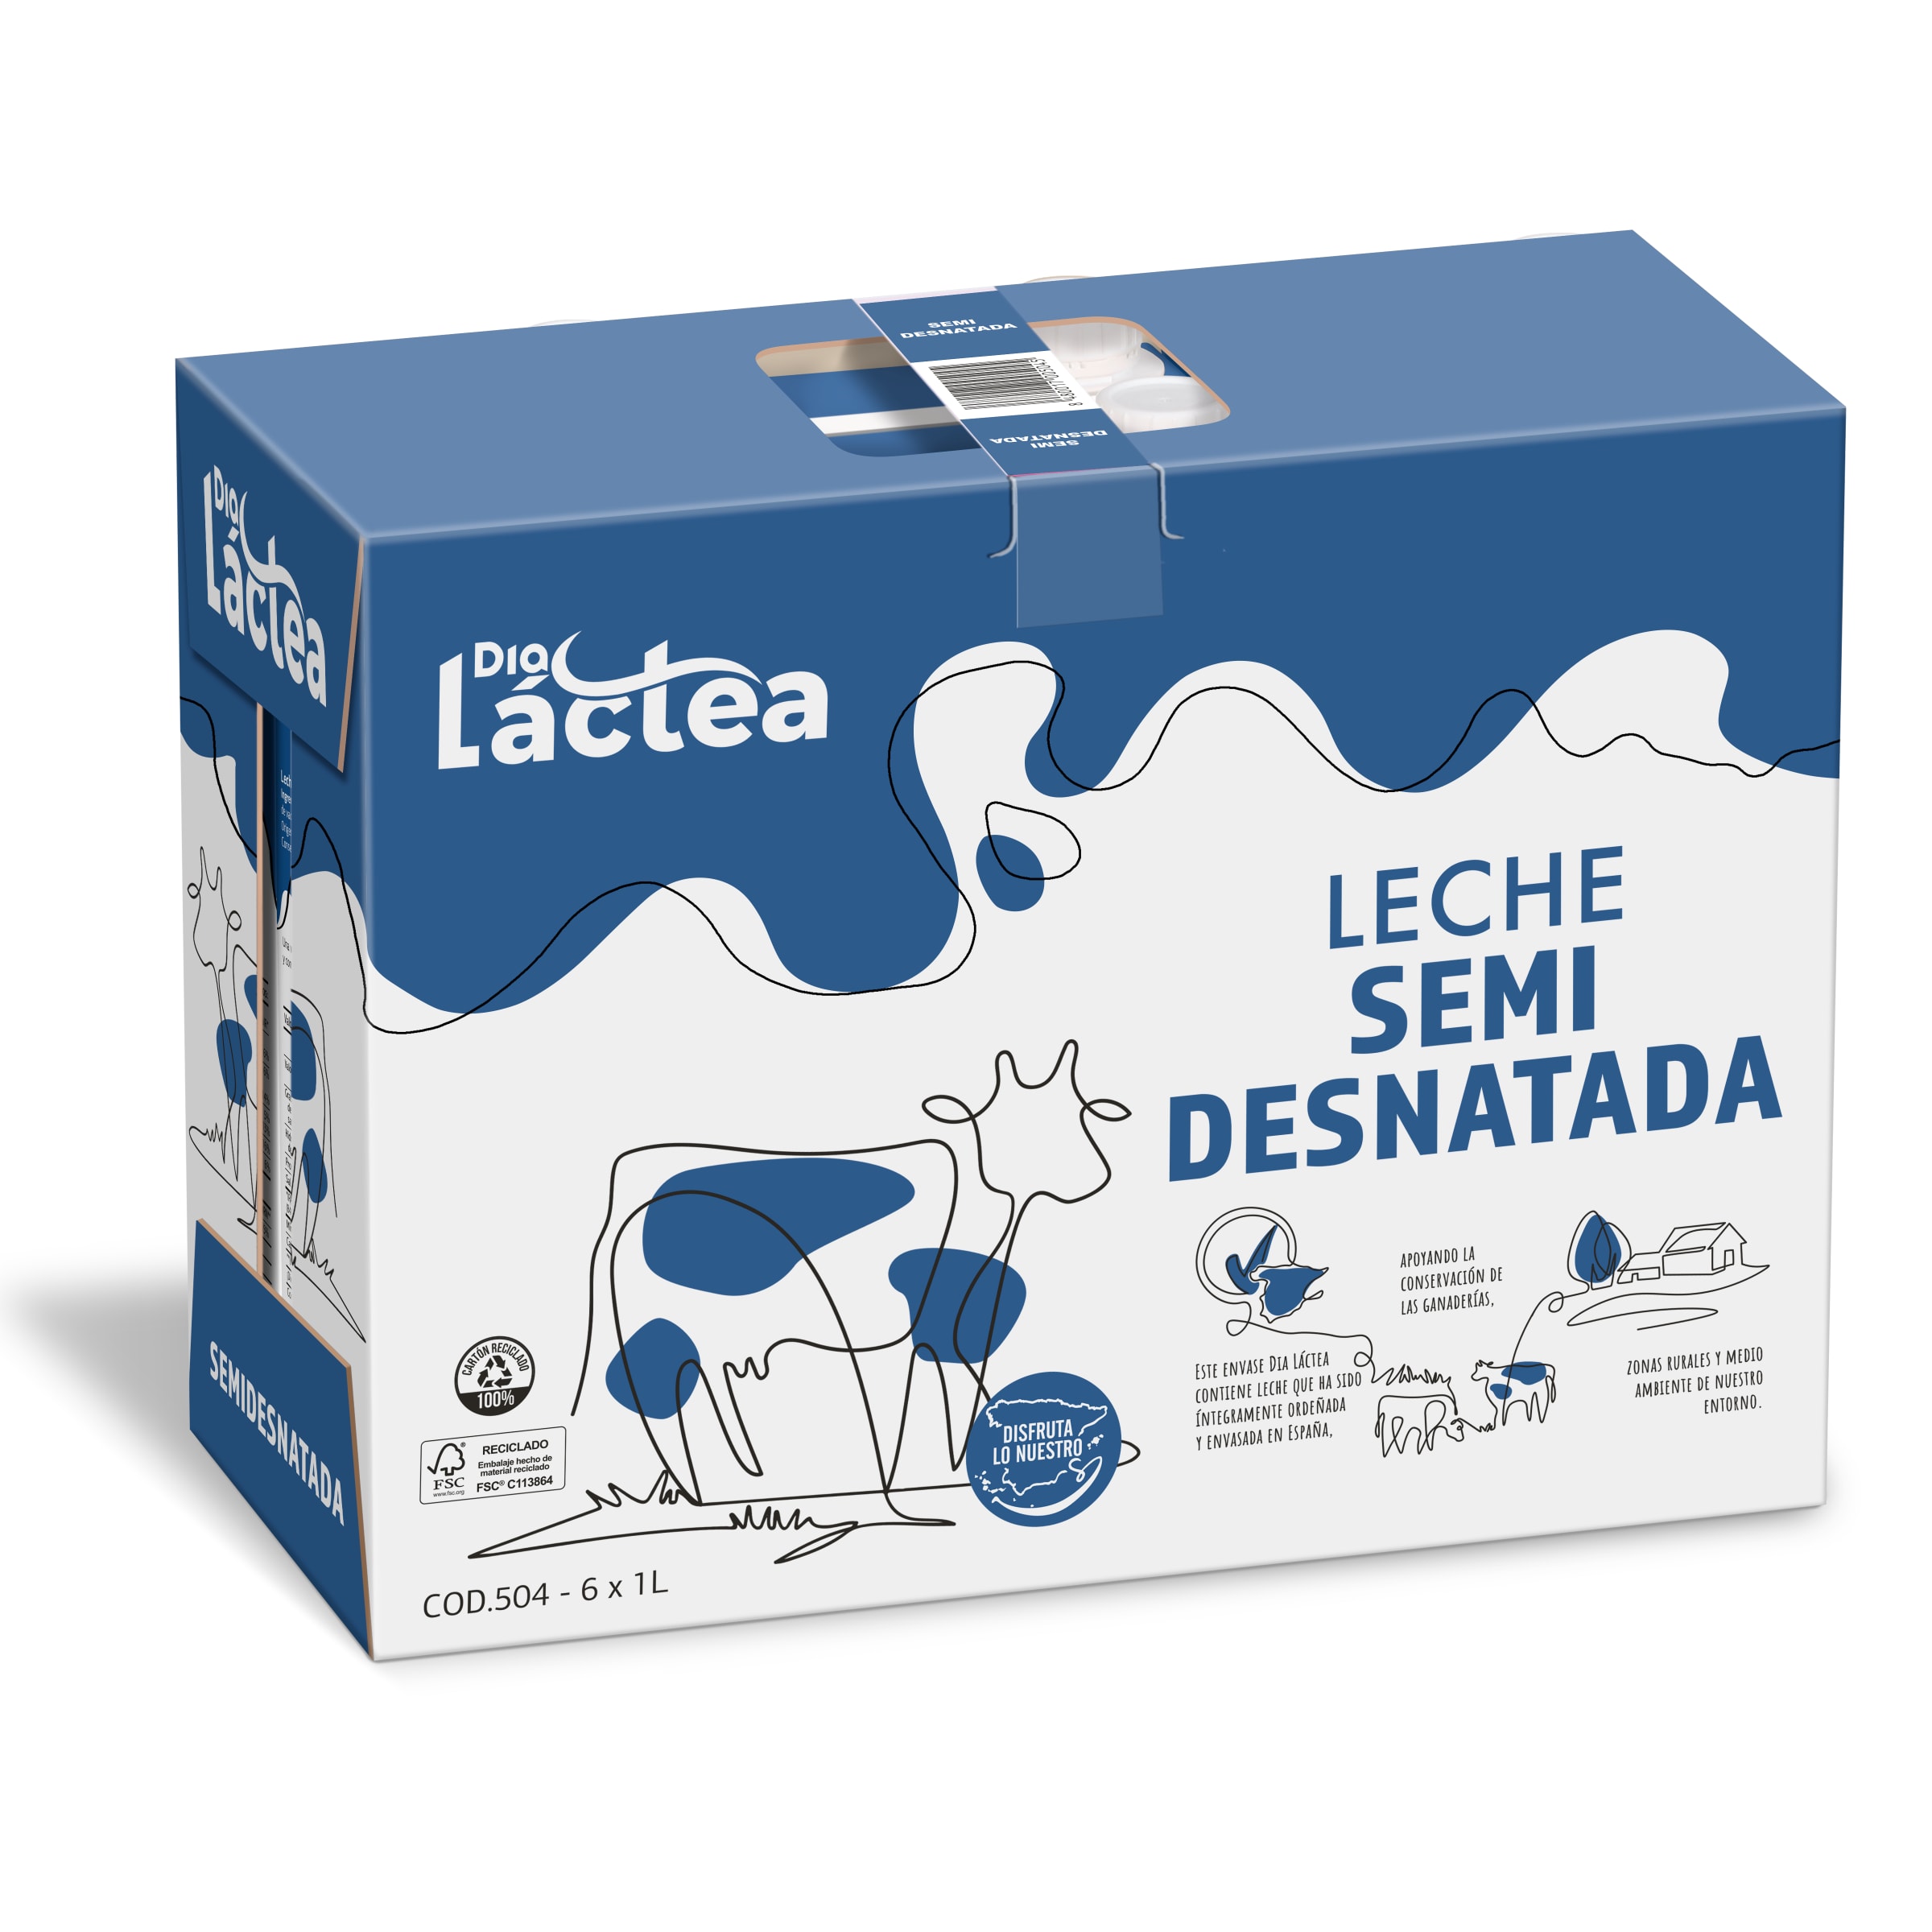 Comprar Leche condensada la lechera 74 en Supermercados MAS Online